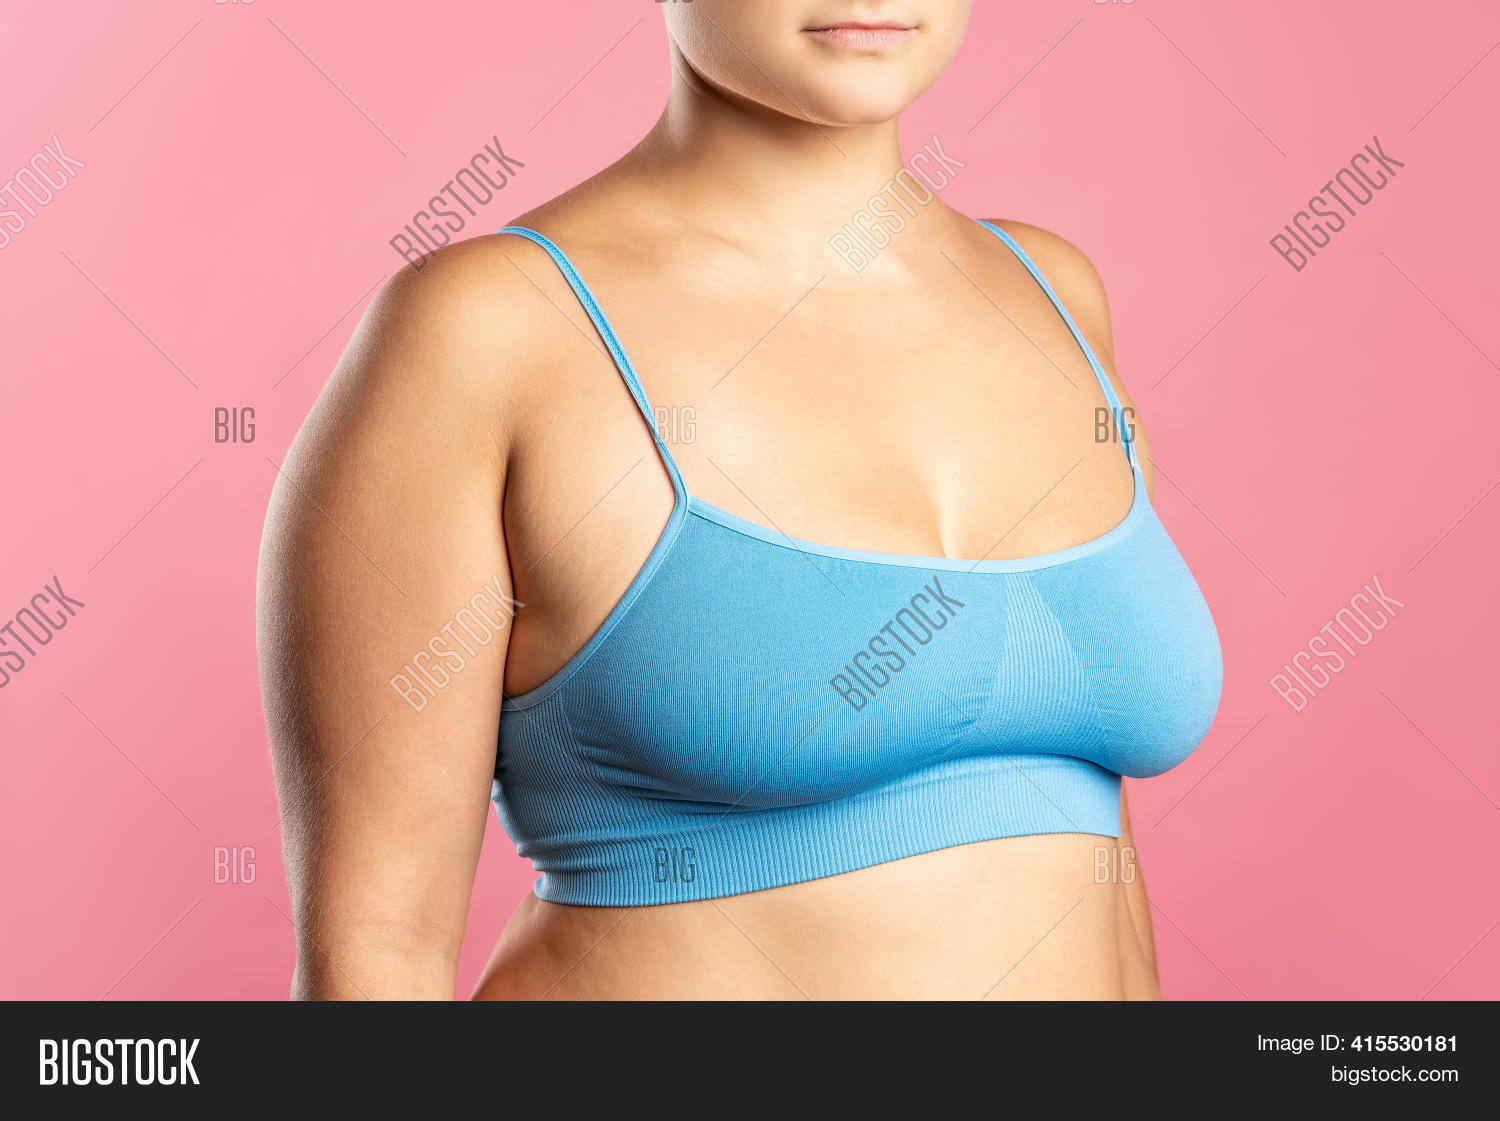 carmin turner add free big natural breast photo